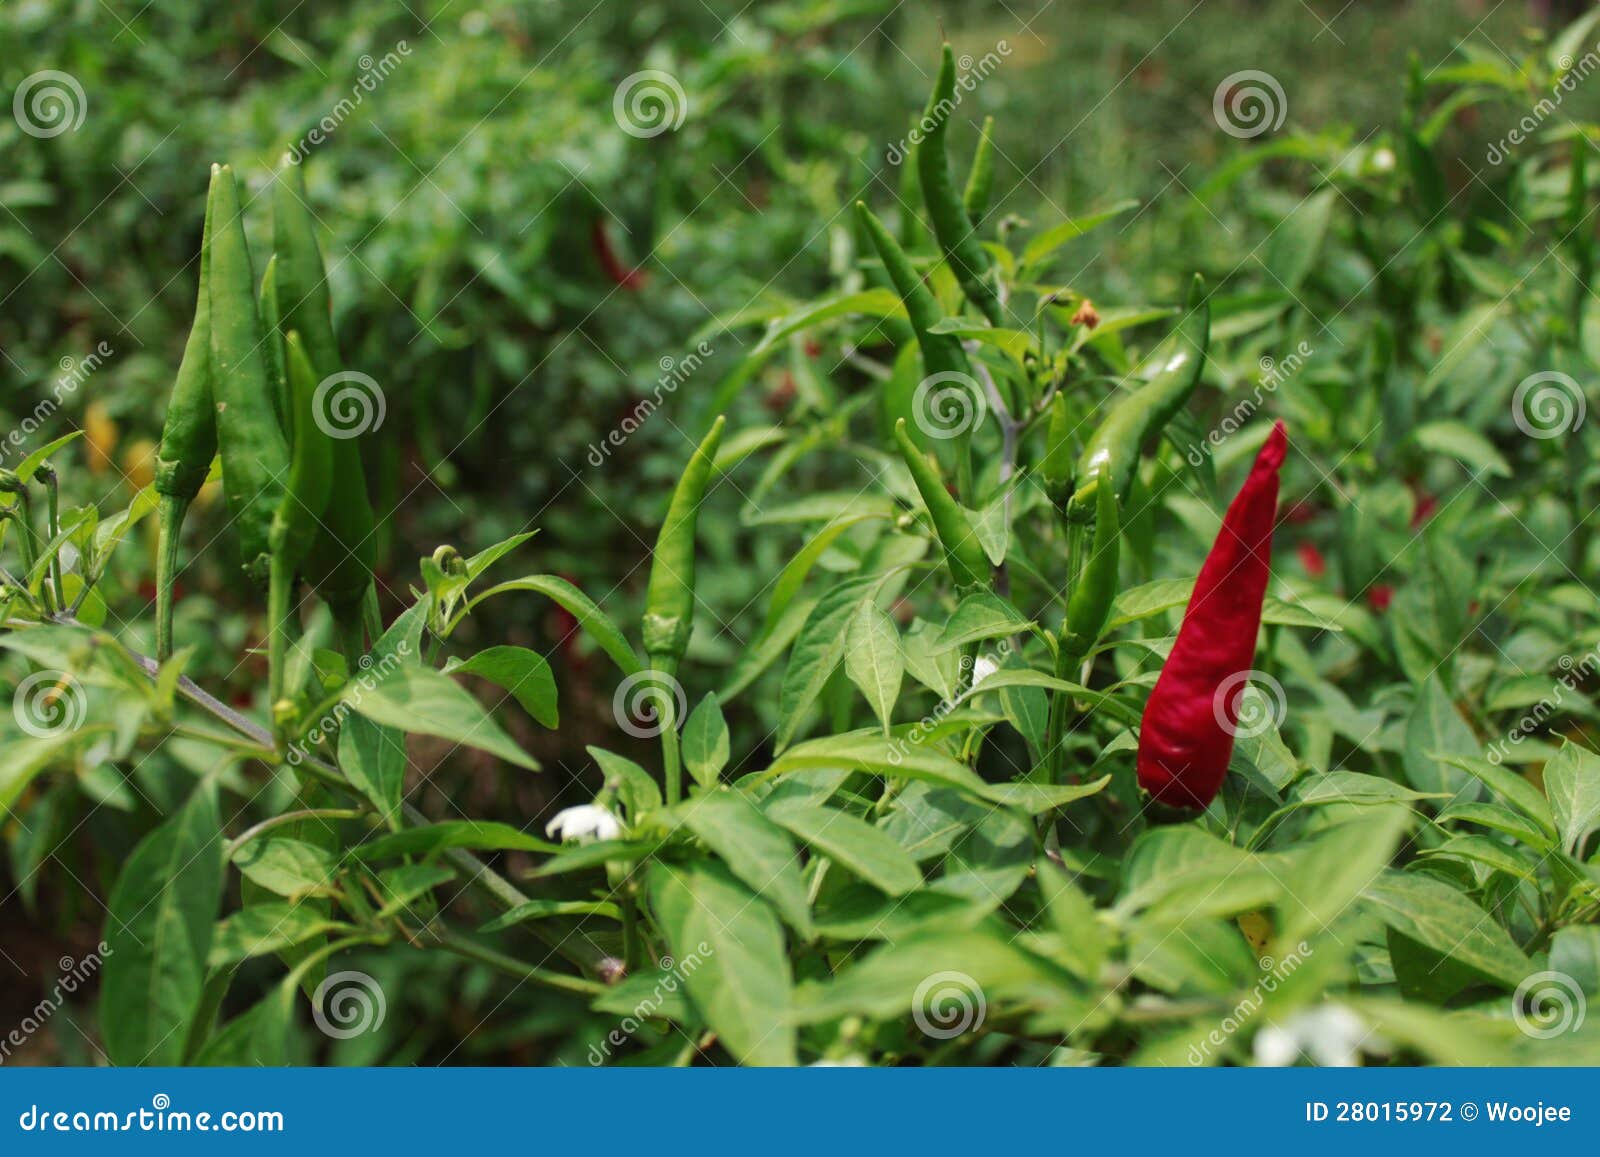 in the field of pepper